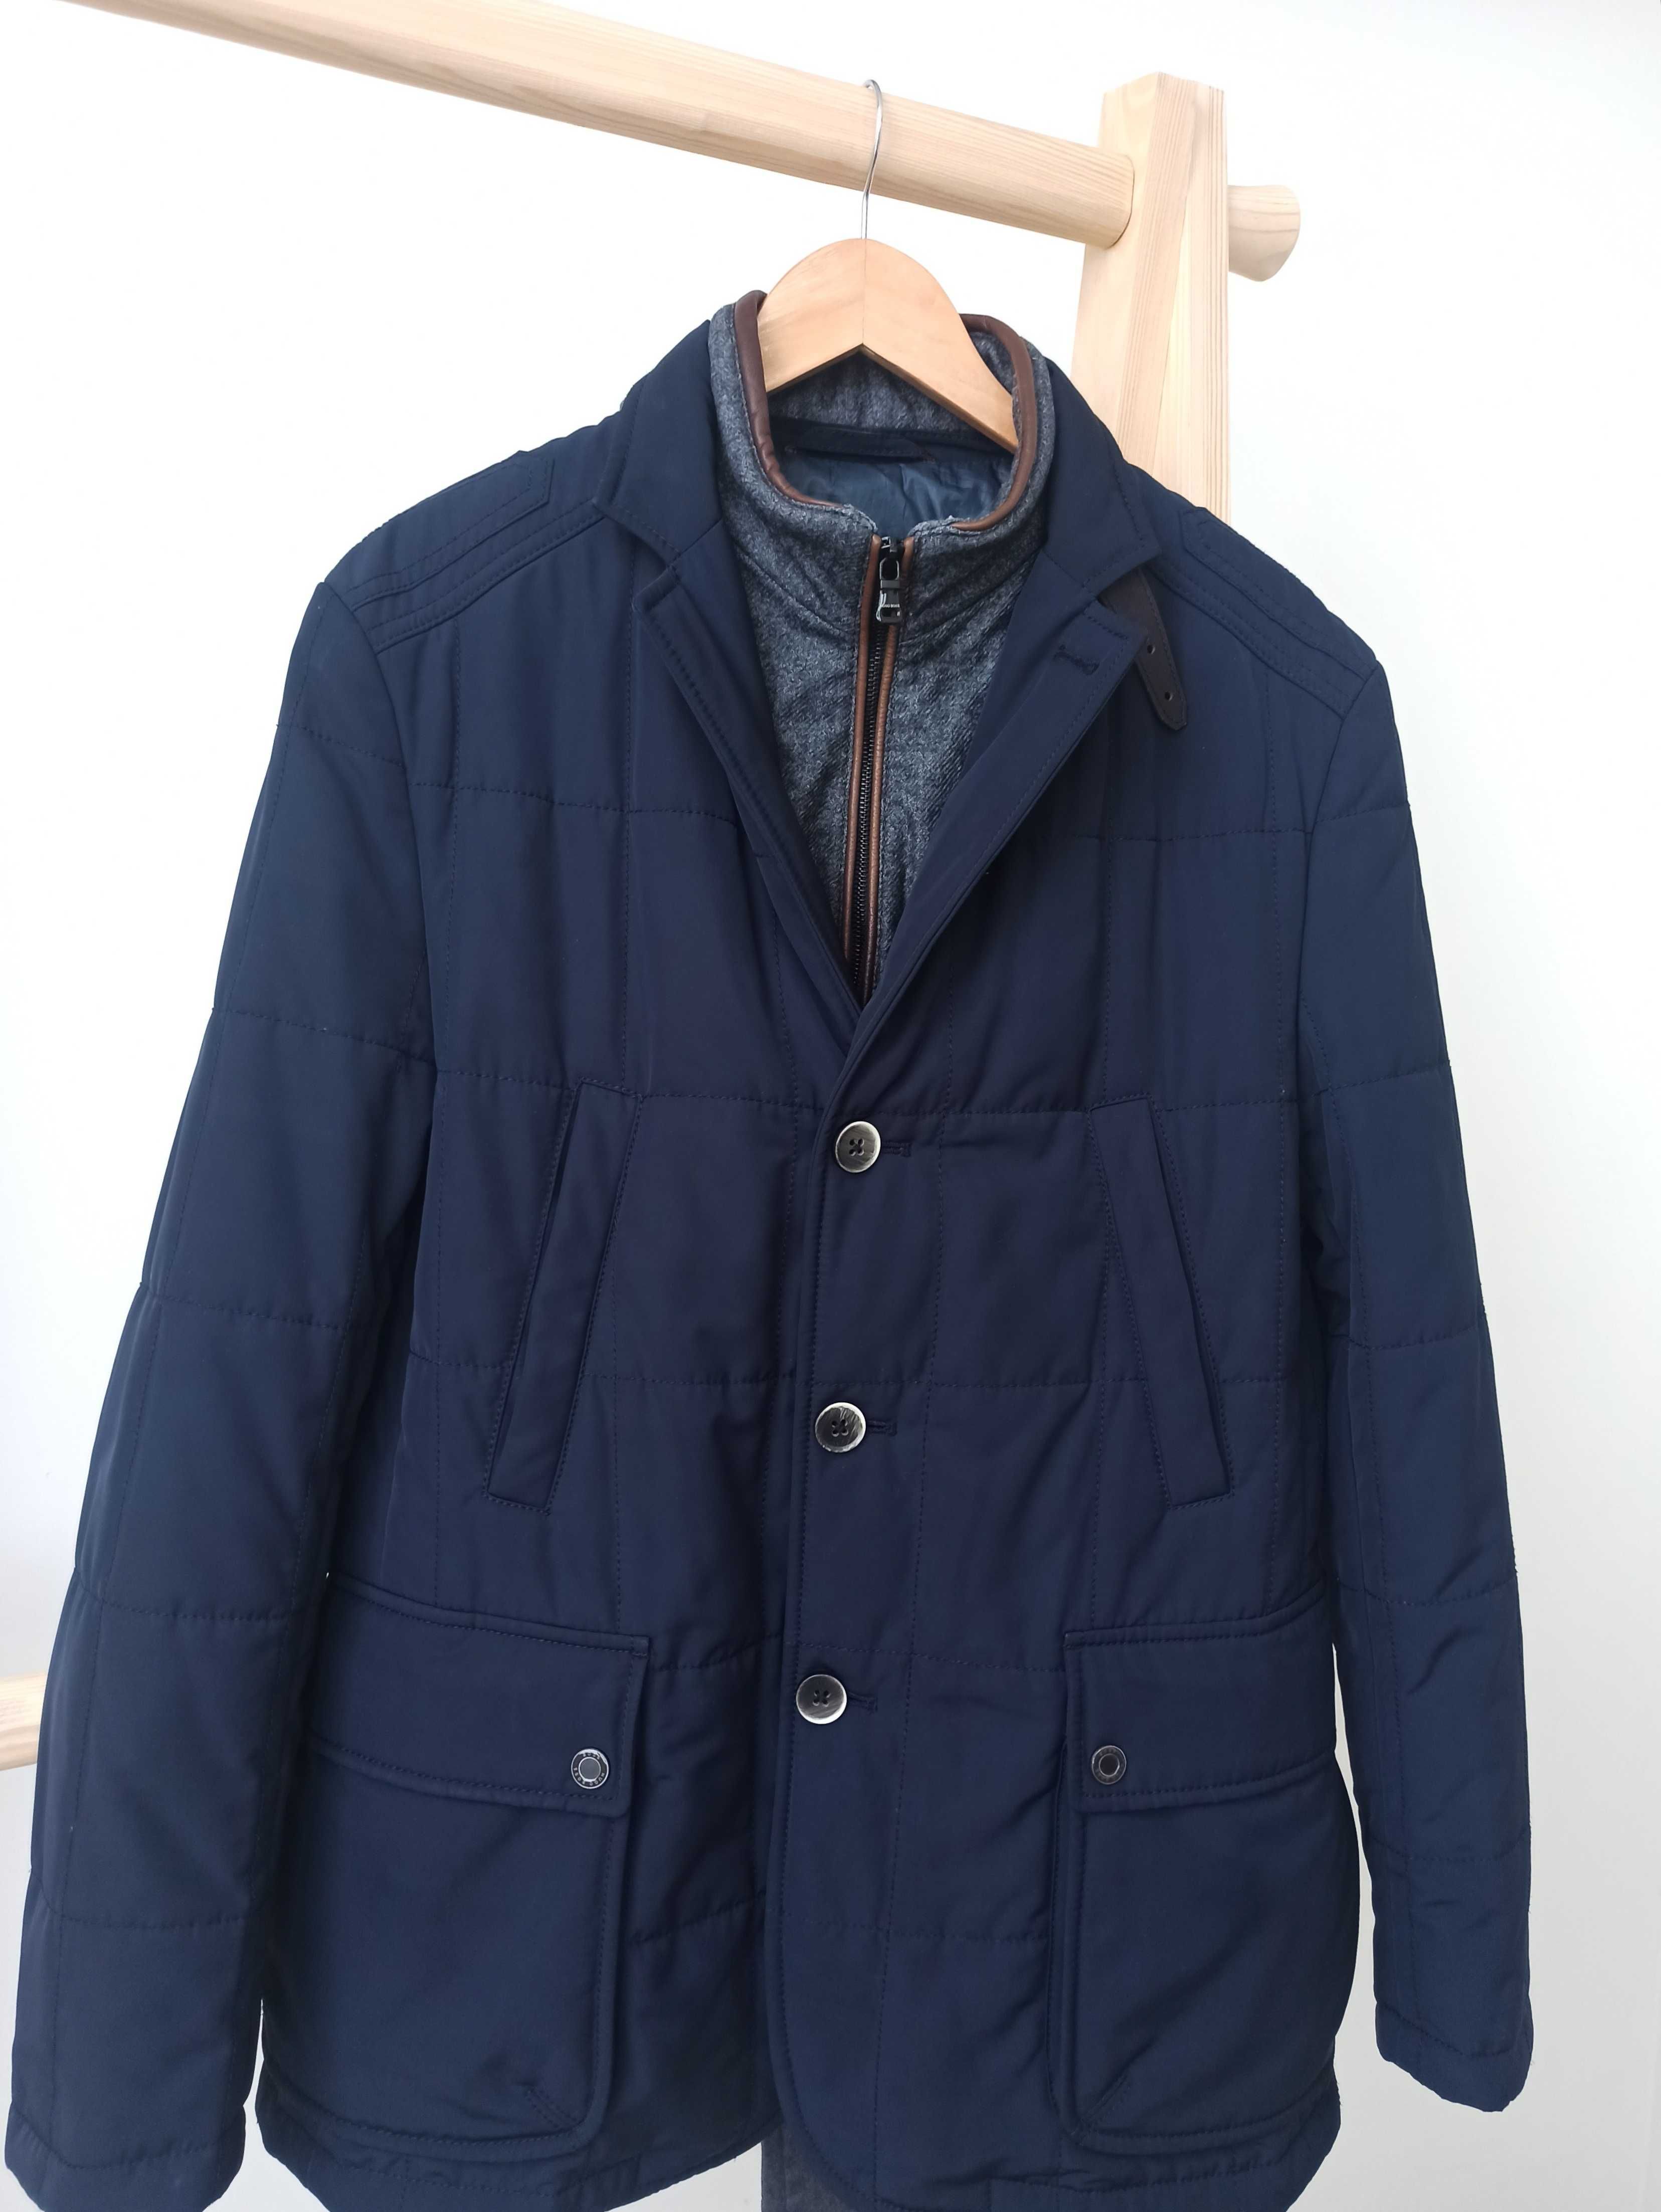 Брендовая  мужская куртка Hugo Boss, премиум класса размер M, L